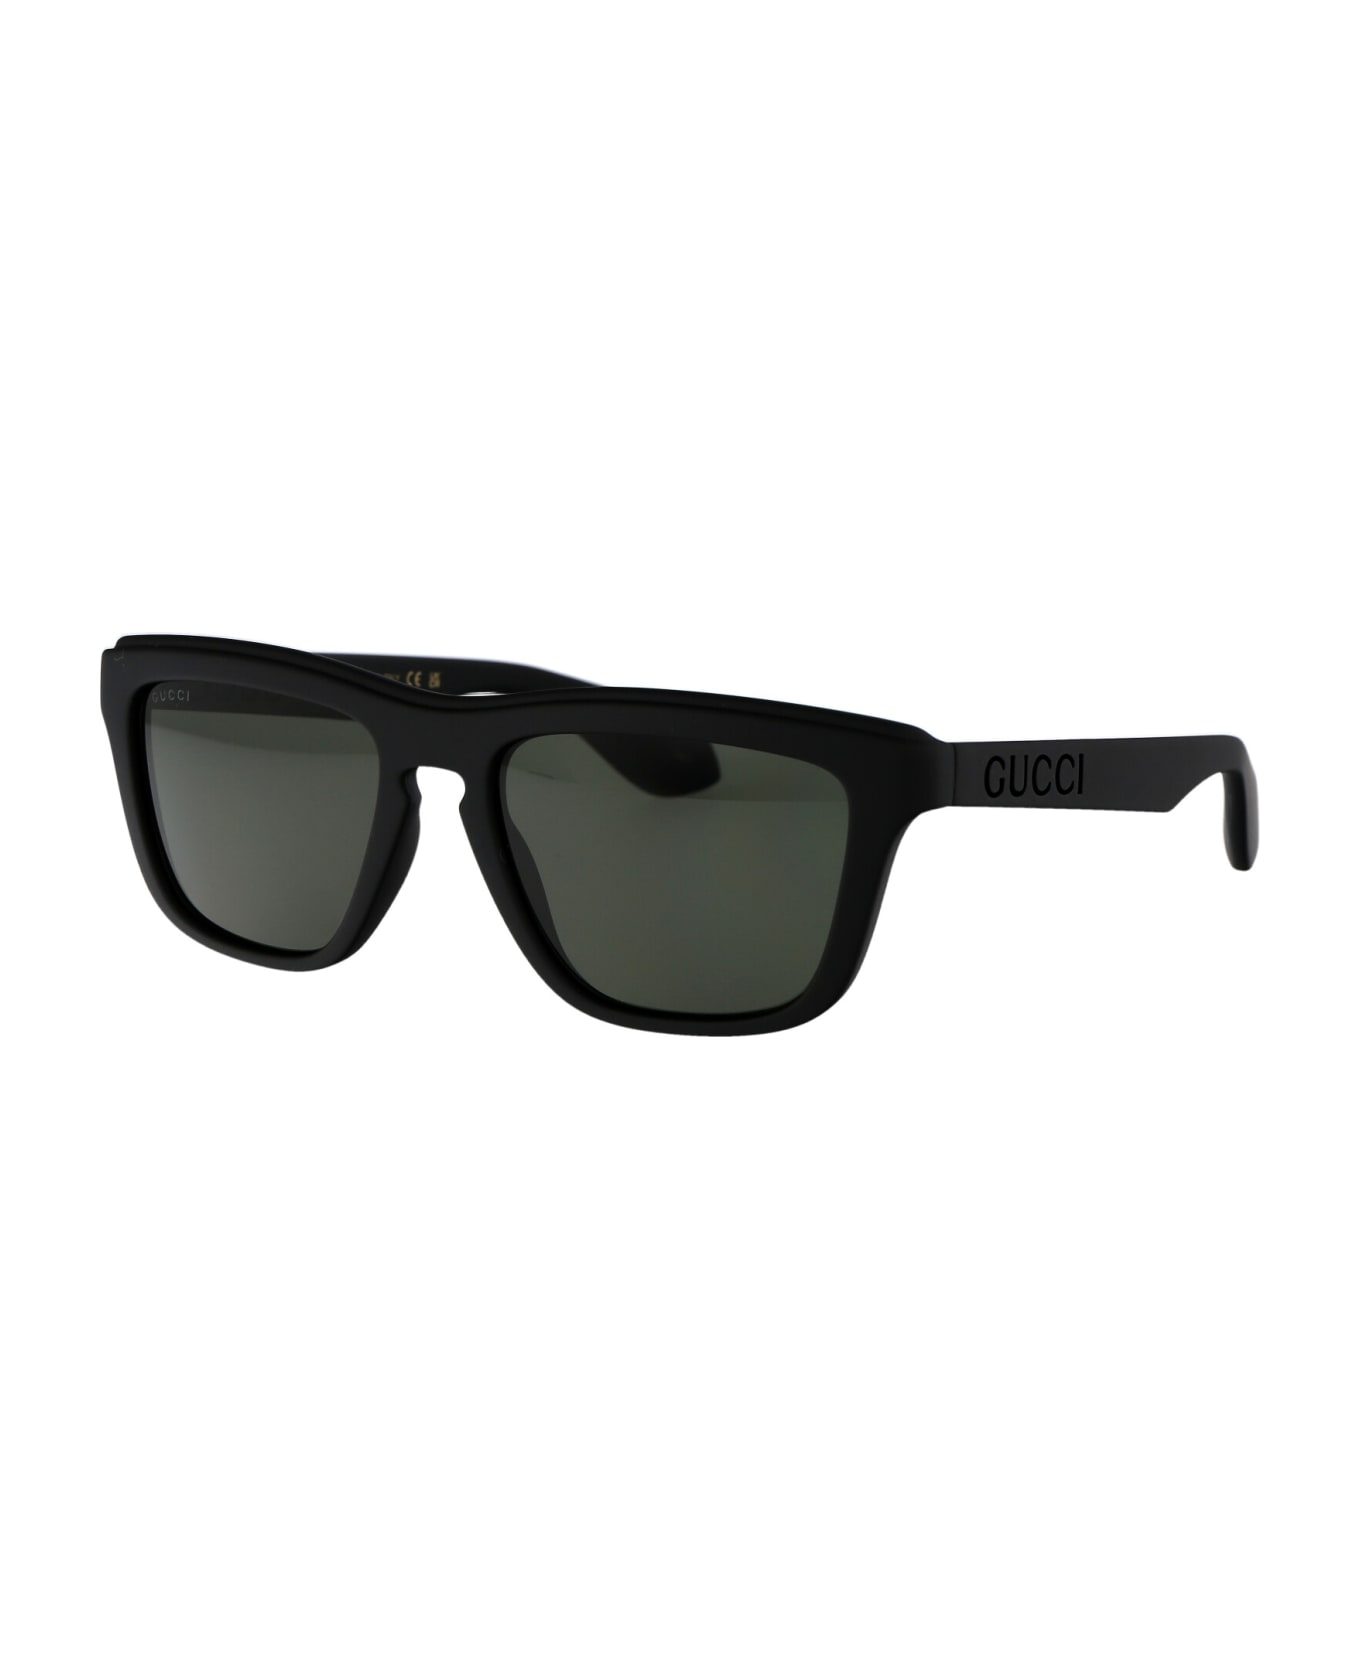 Gucci Eyewear Gg1571s Sunglasses - 001 BLACK BLACK GREY